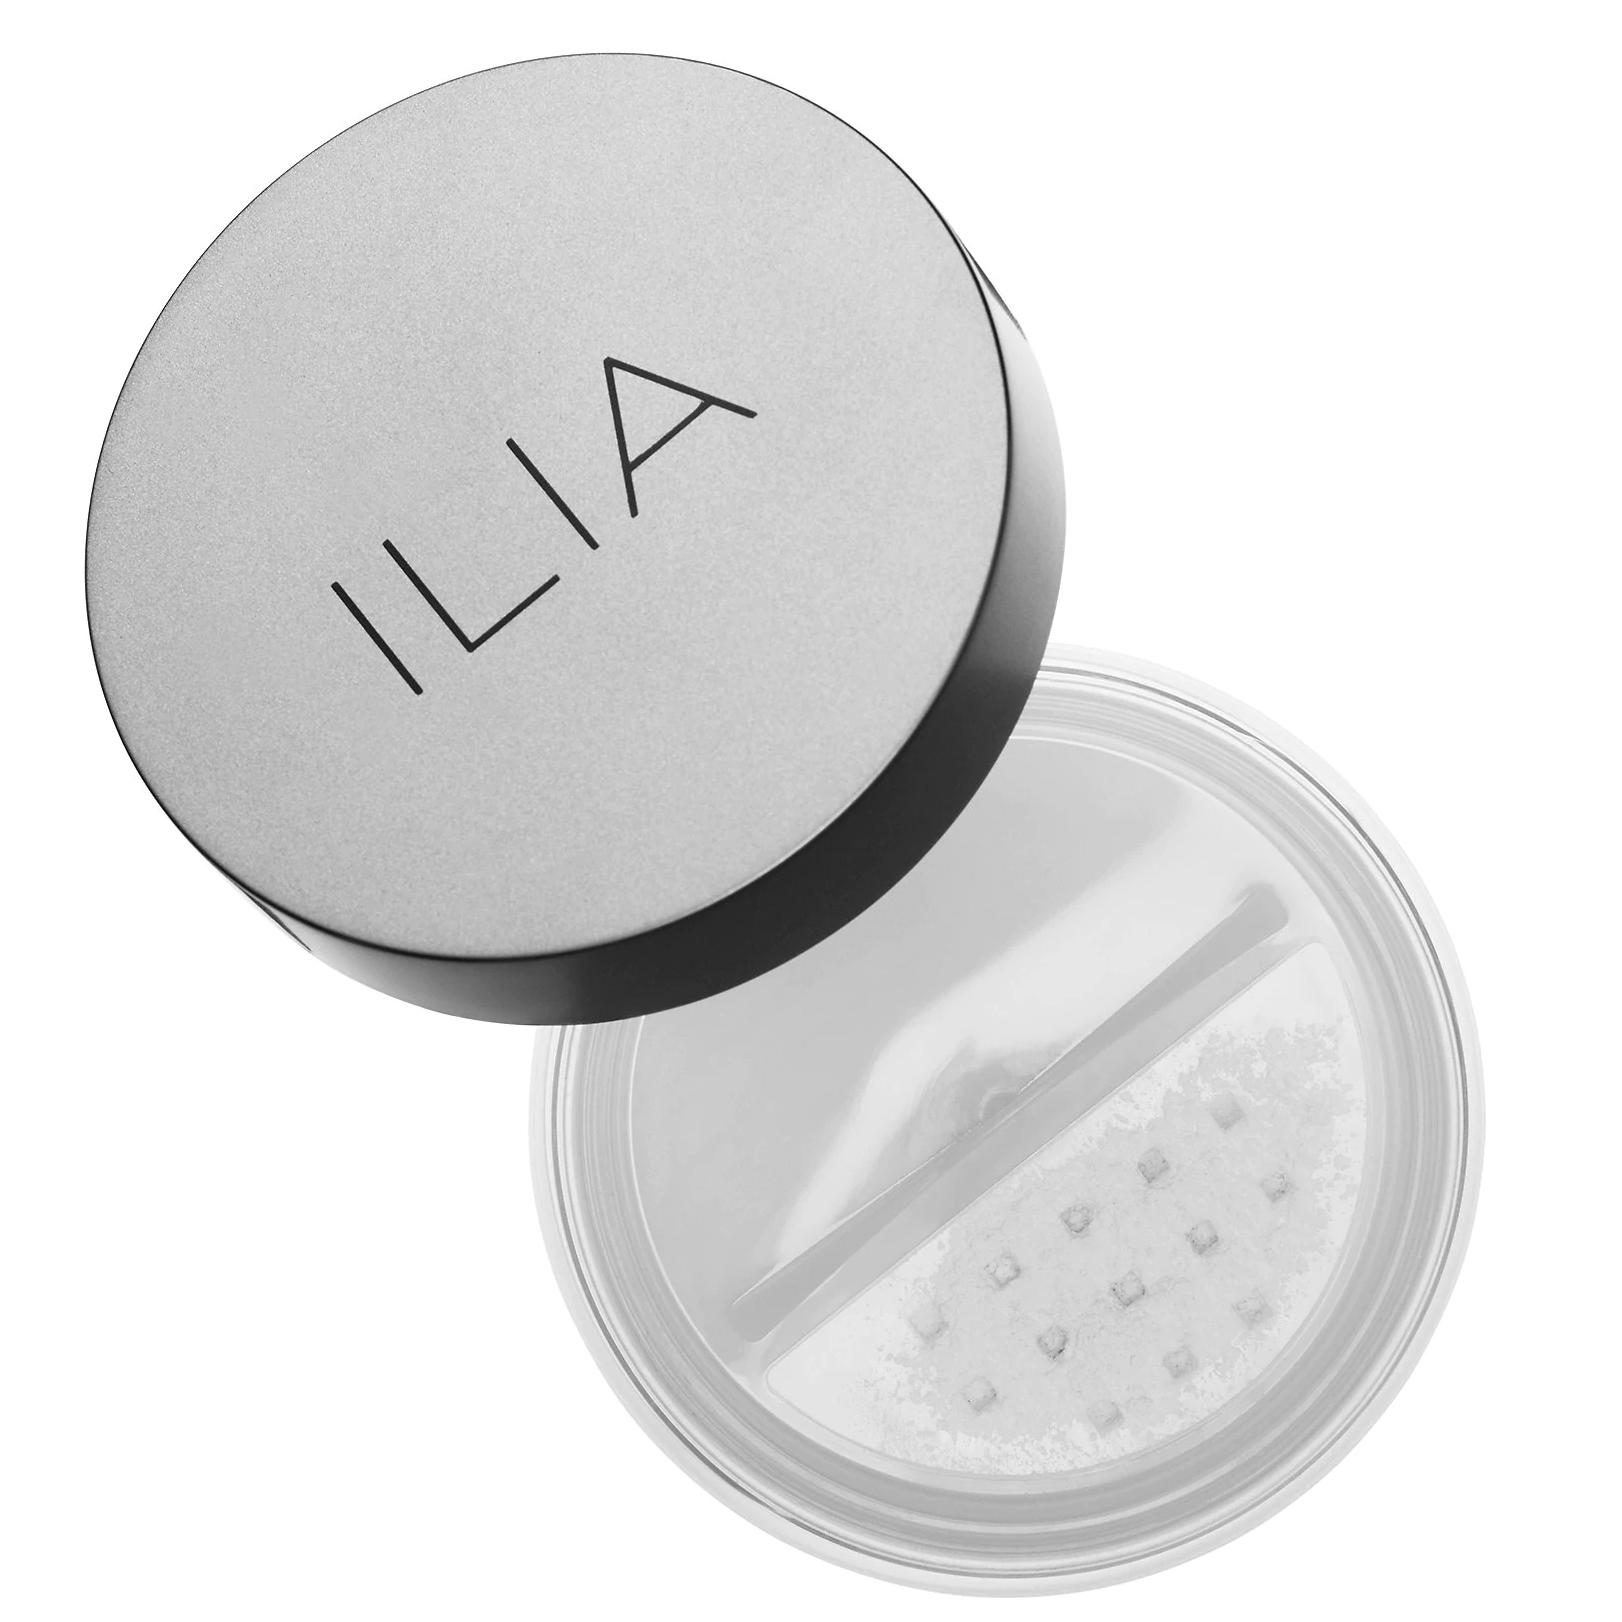 ILIA Soft Focus Finishing Powder